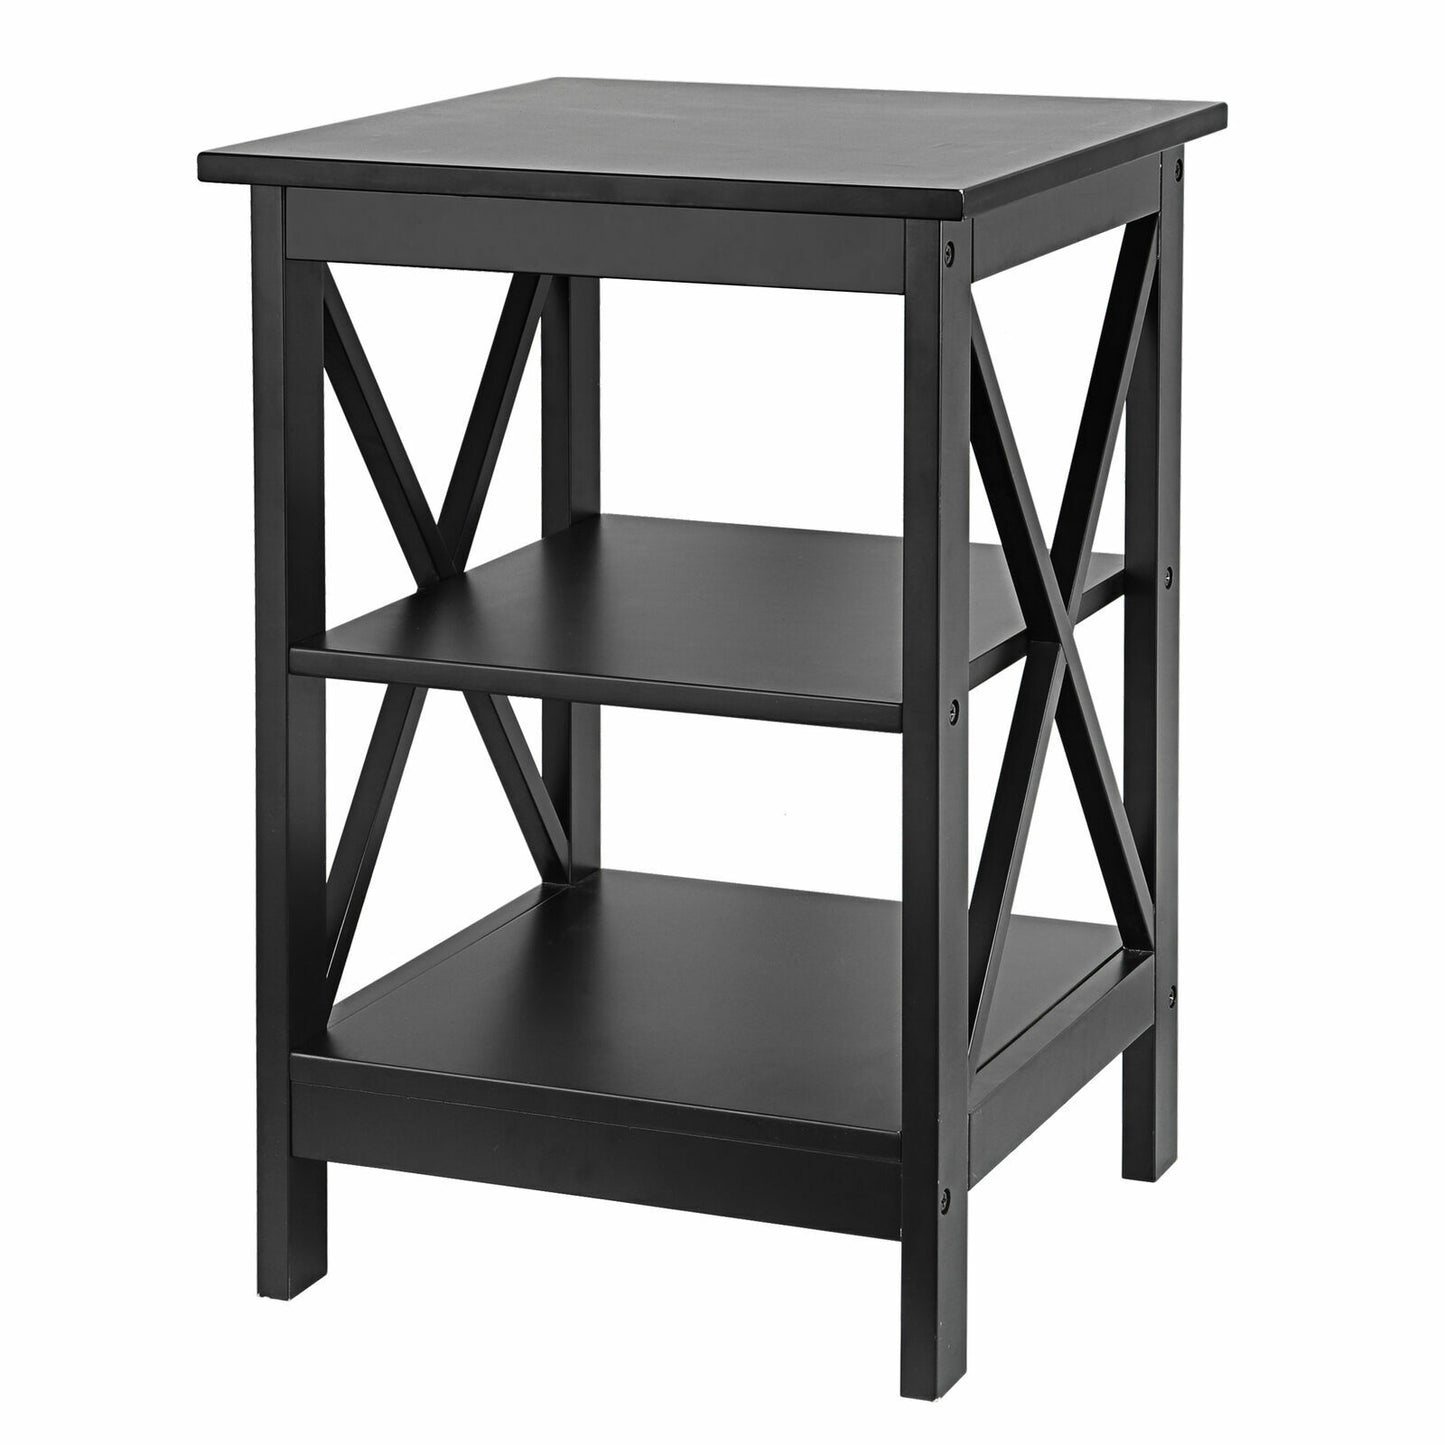 2PCS End Table with Storage Shelves Versatile X-Design Sofa Side Table Furniture